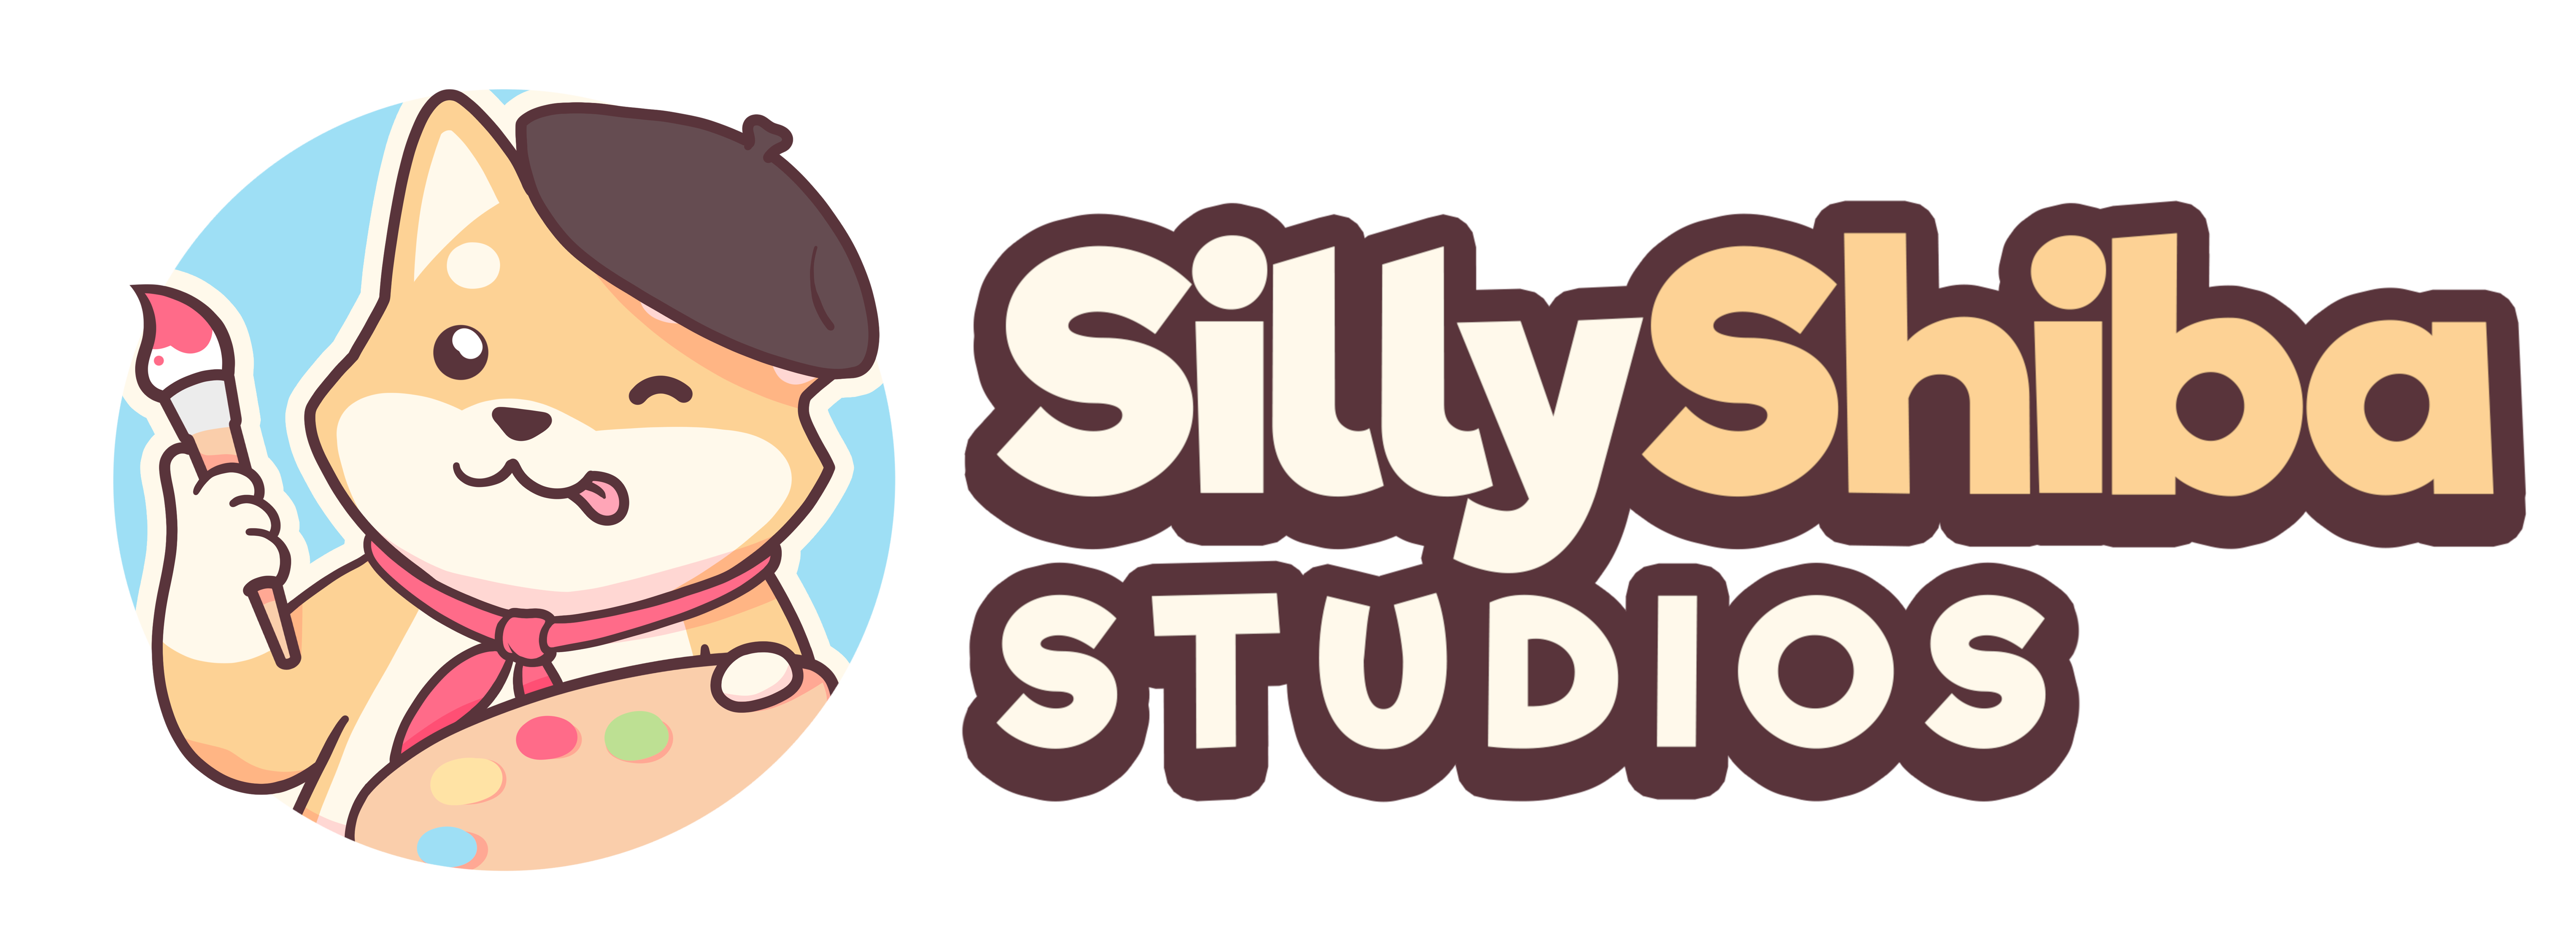 Silly Shiba Studios